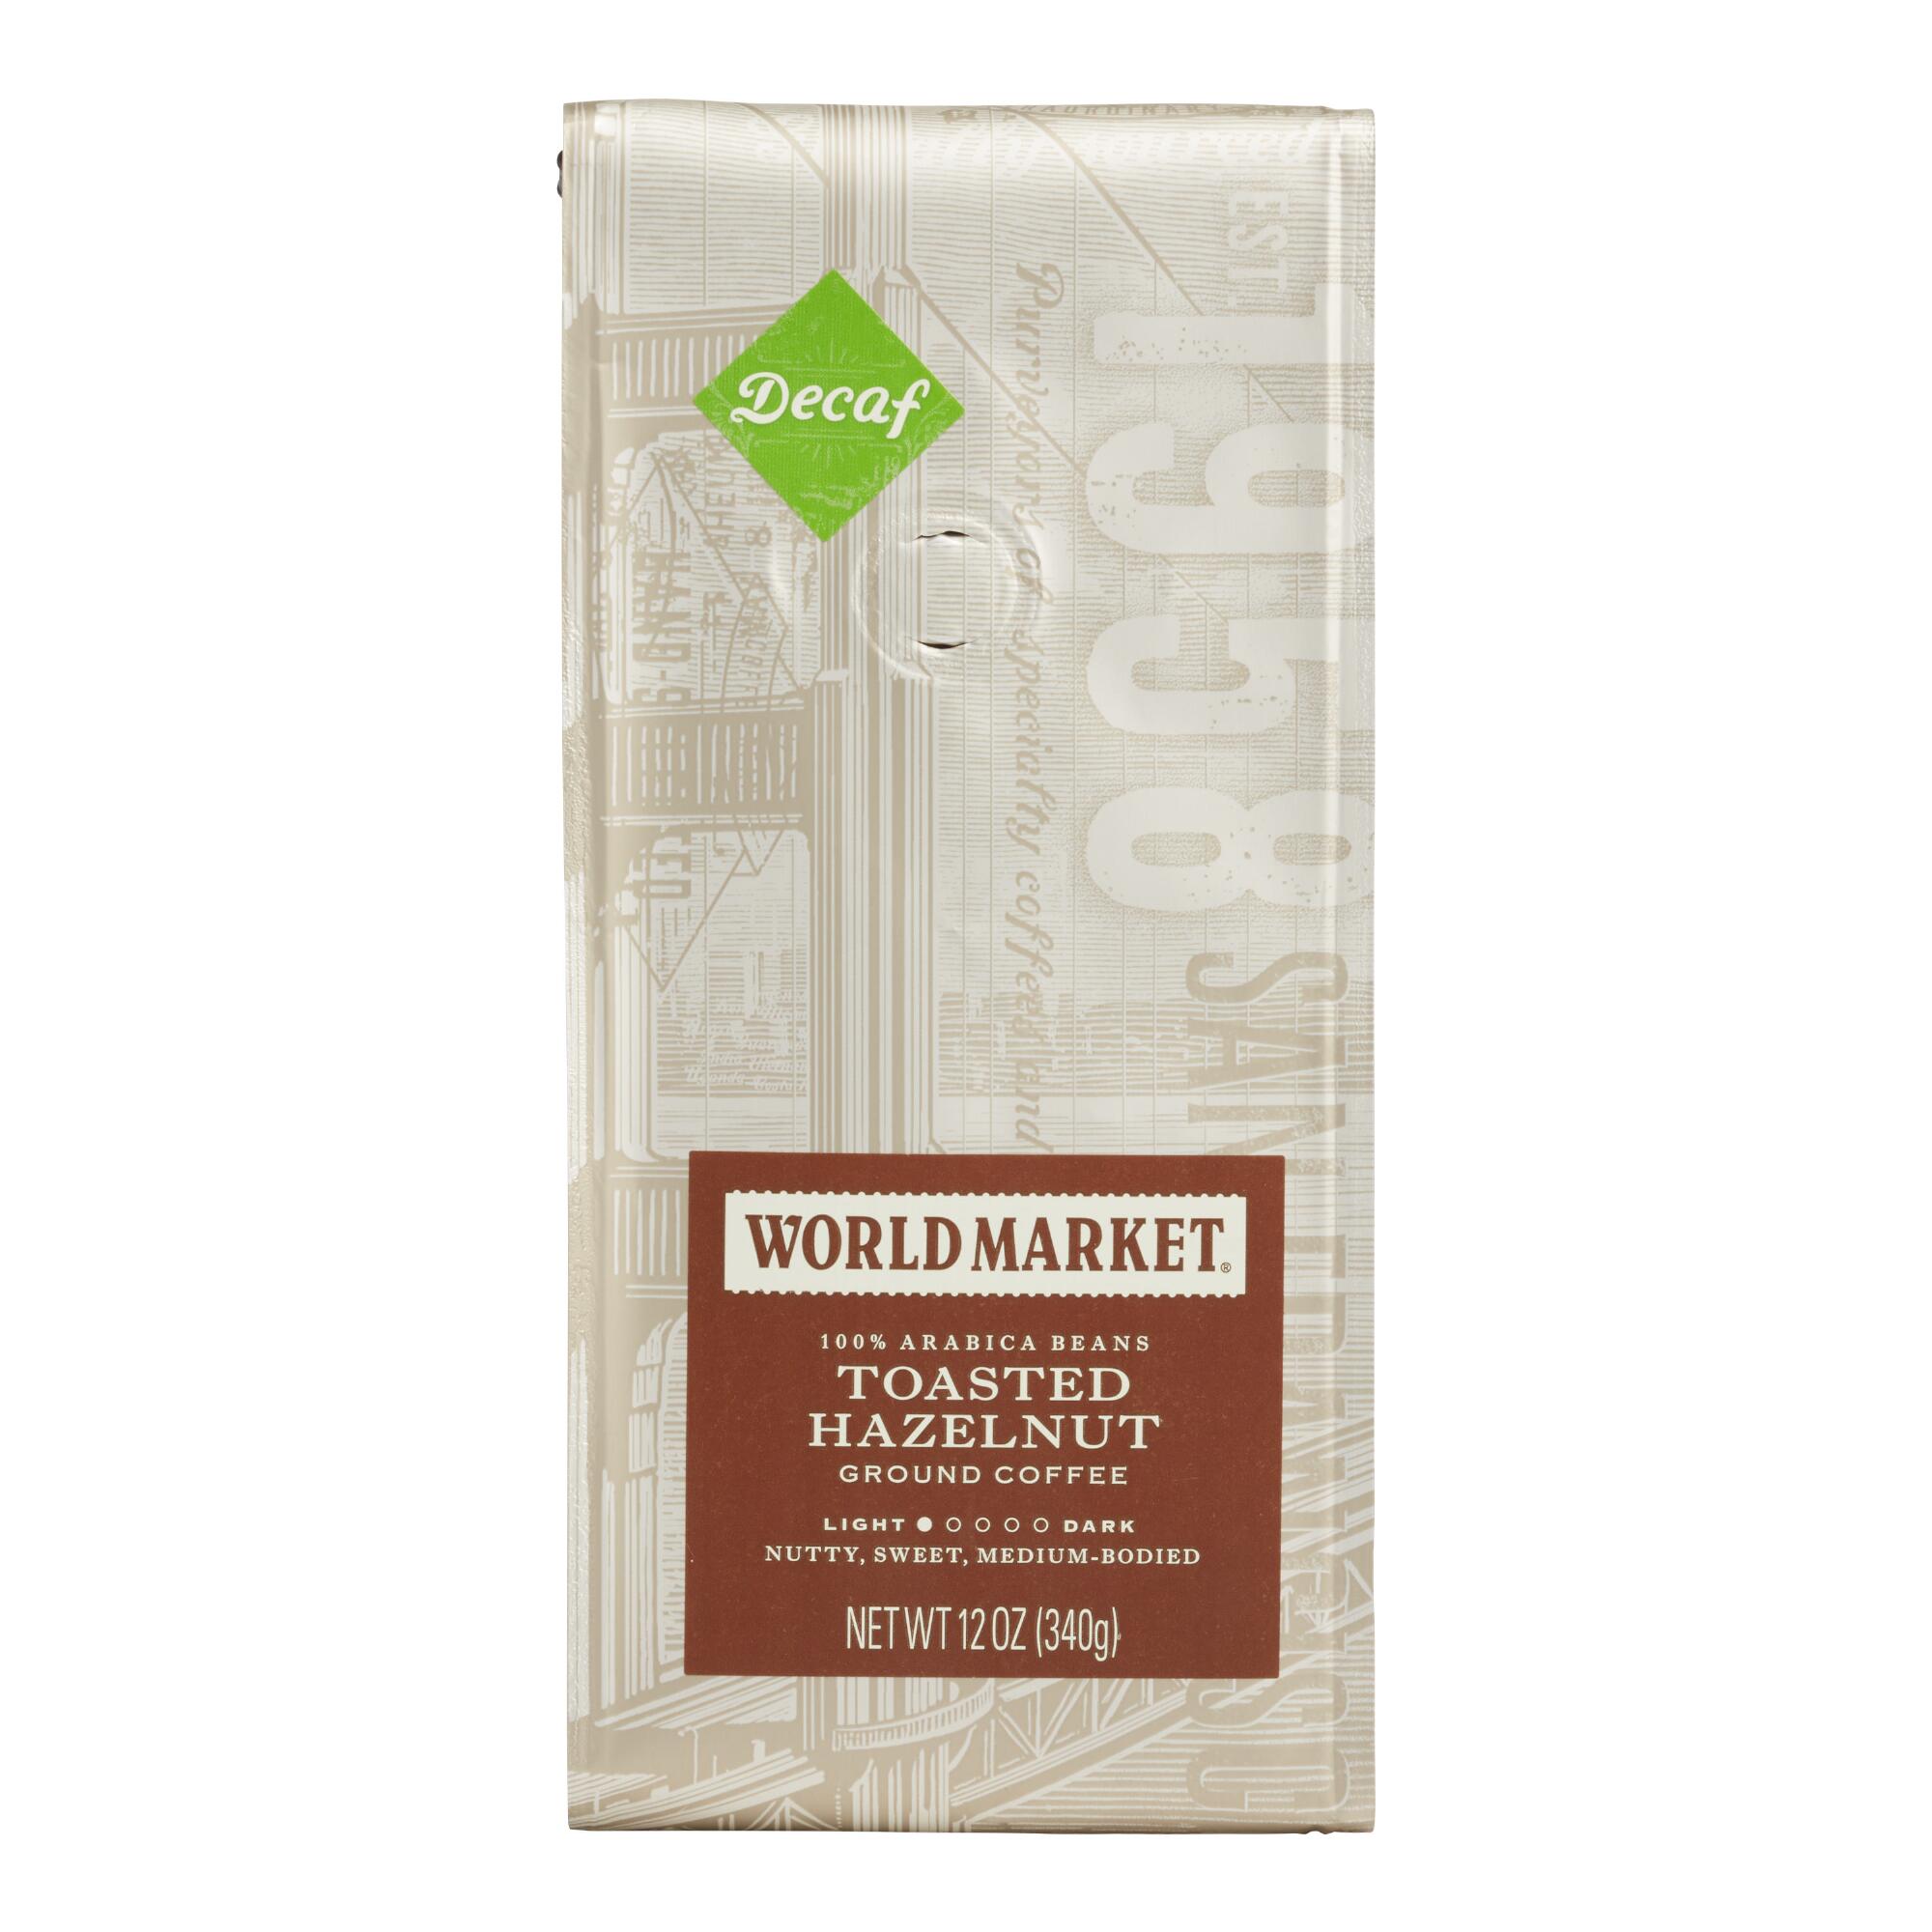 12 Oz. World Market Decaf Toasted Hazelnut Ground Coffee by World Market